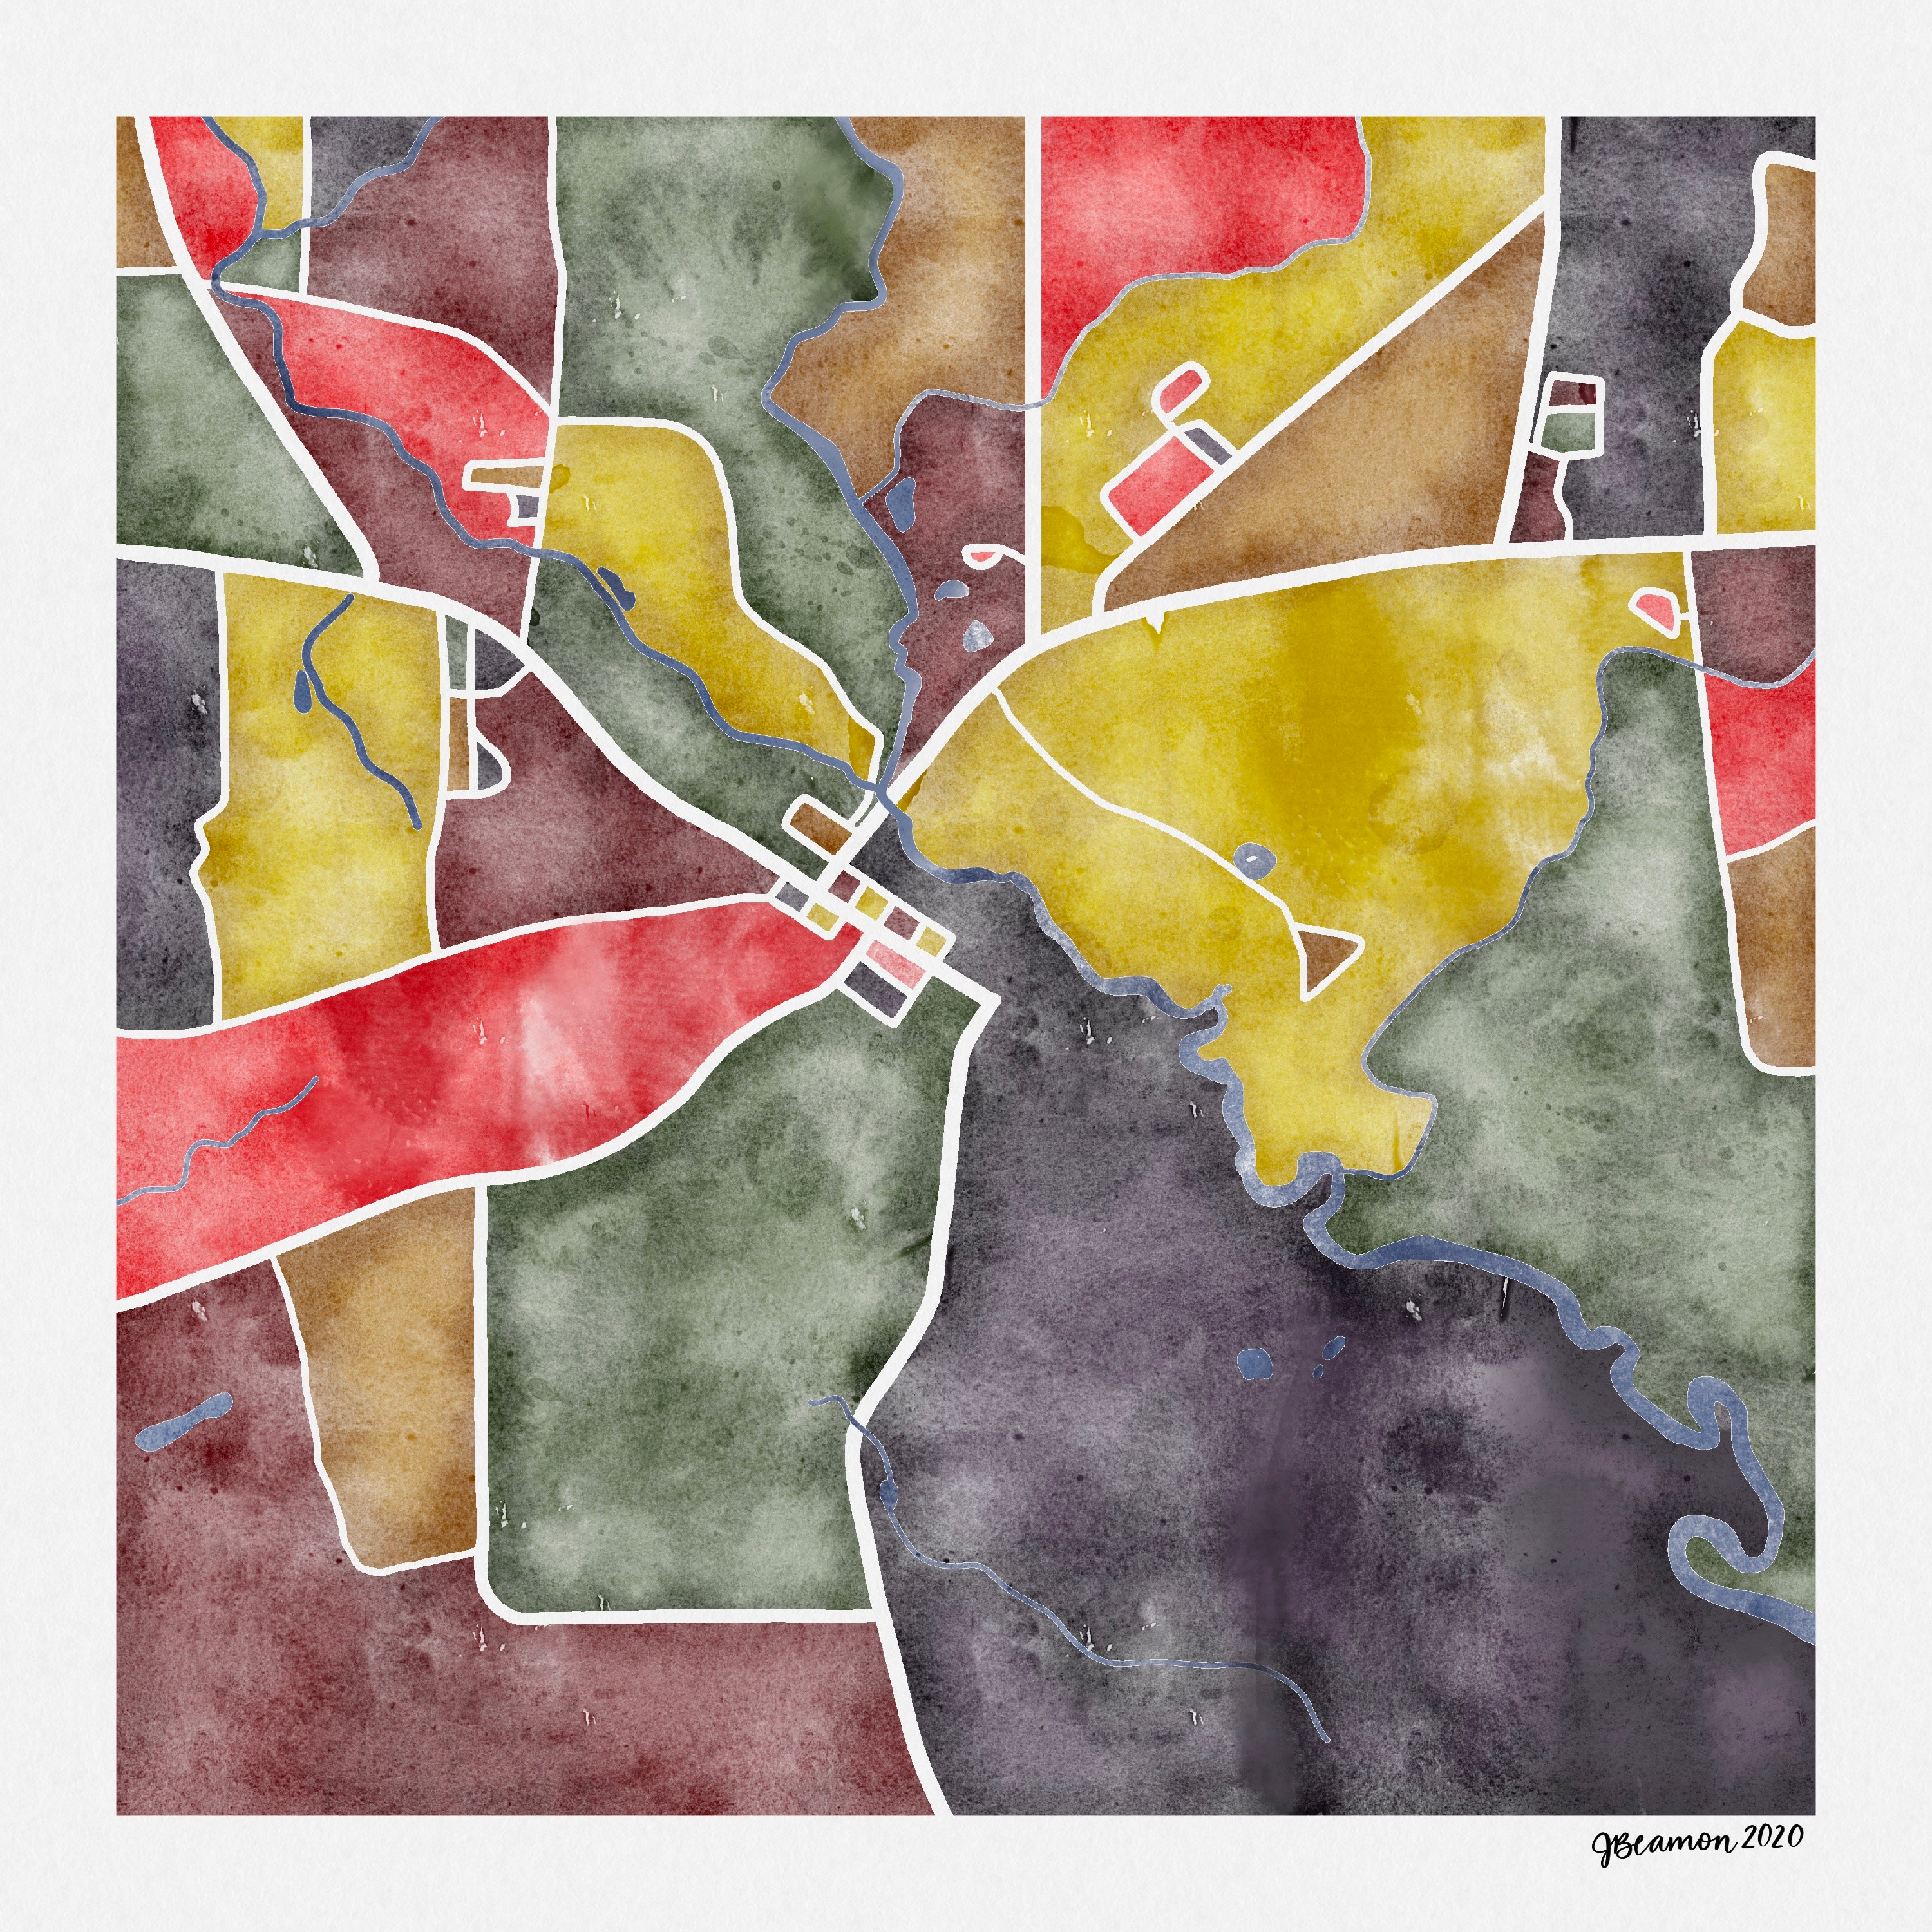 minecraft 1.12 city maps